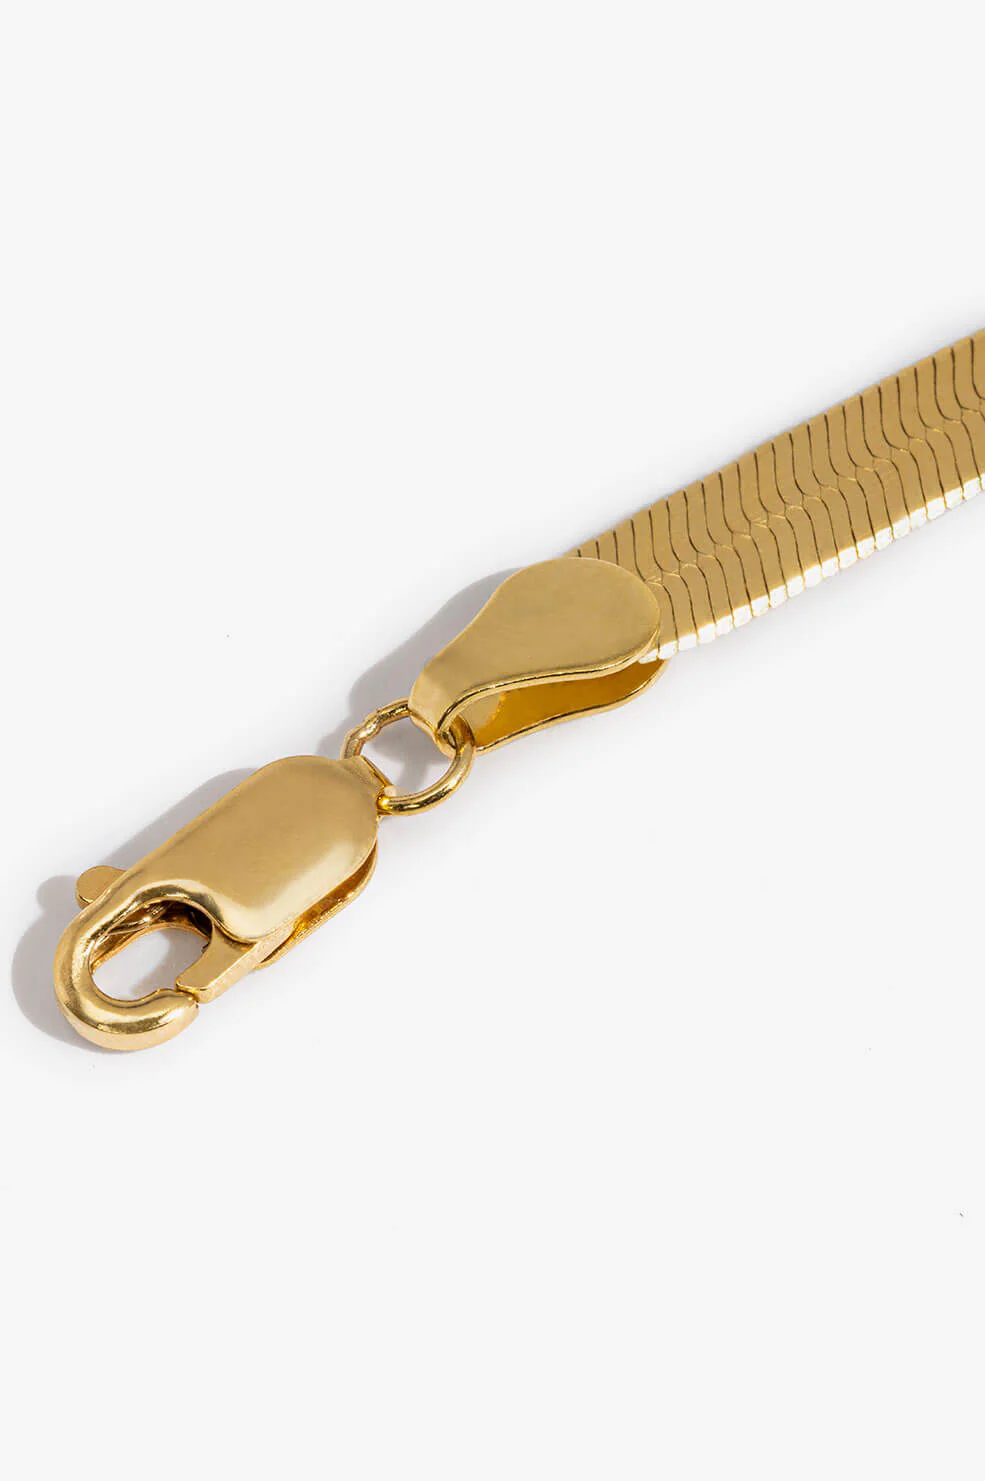 Unique Copper Chain Necklace, infinity clasp – CookOnStrike